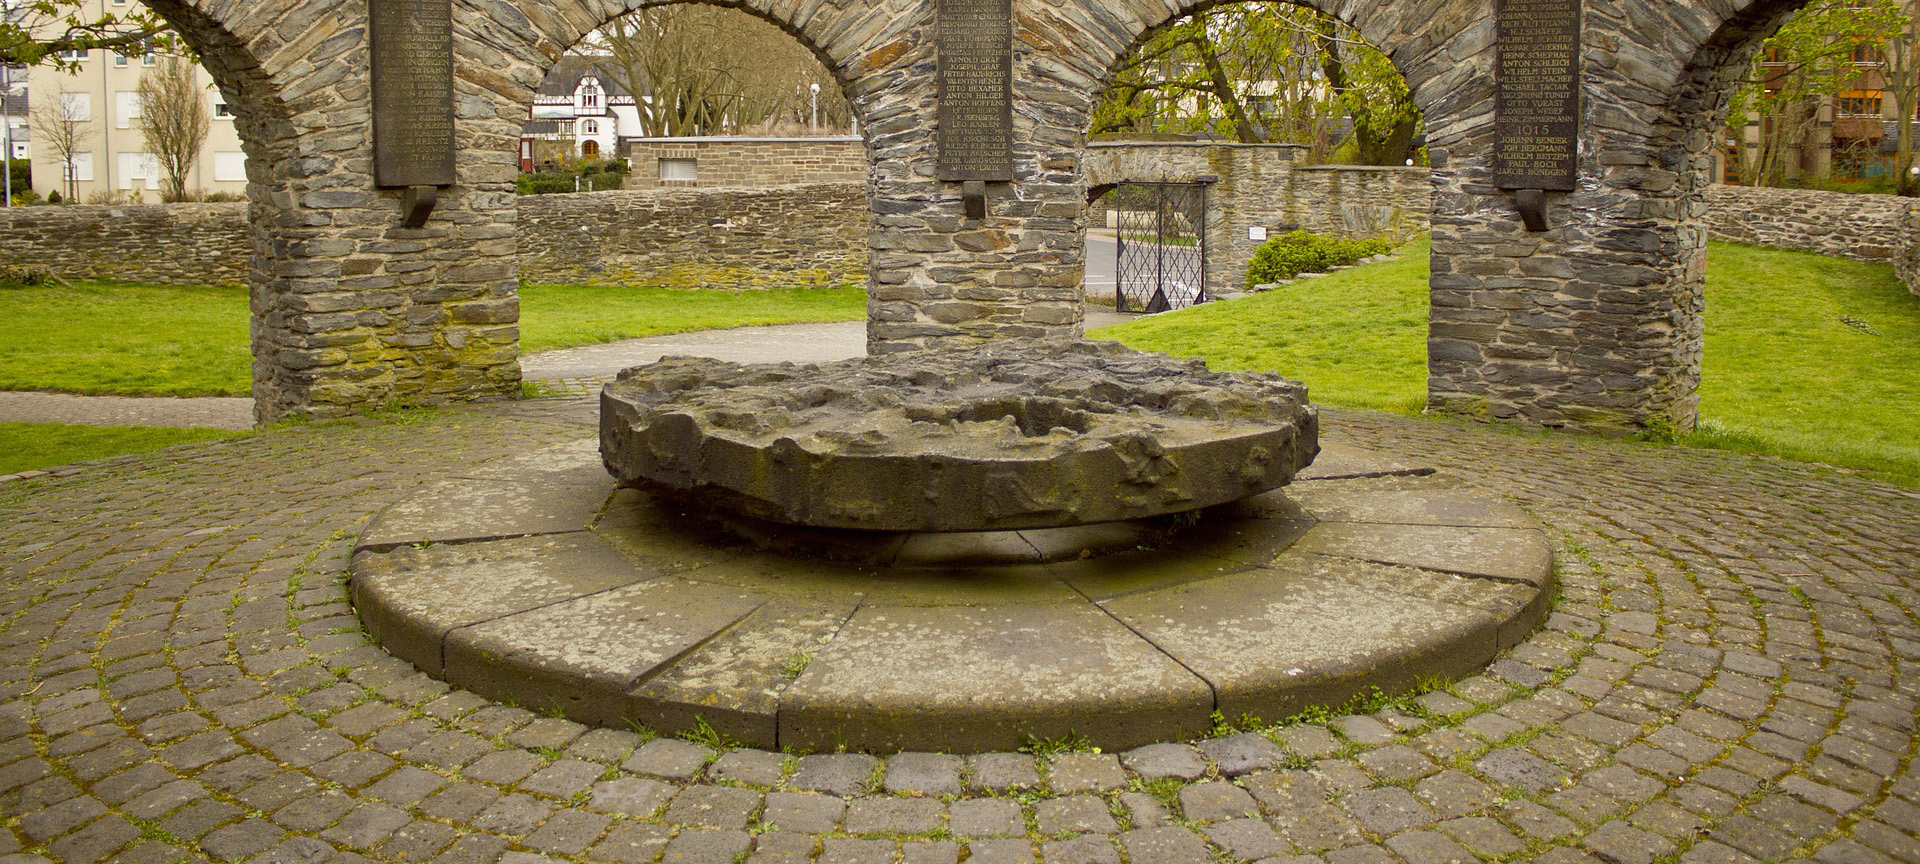 A millstone